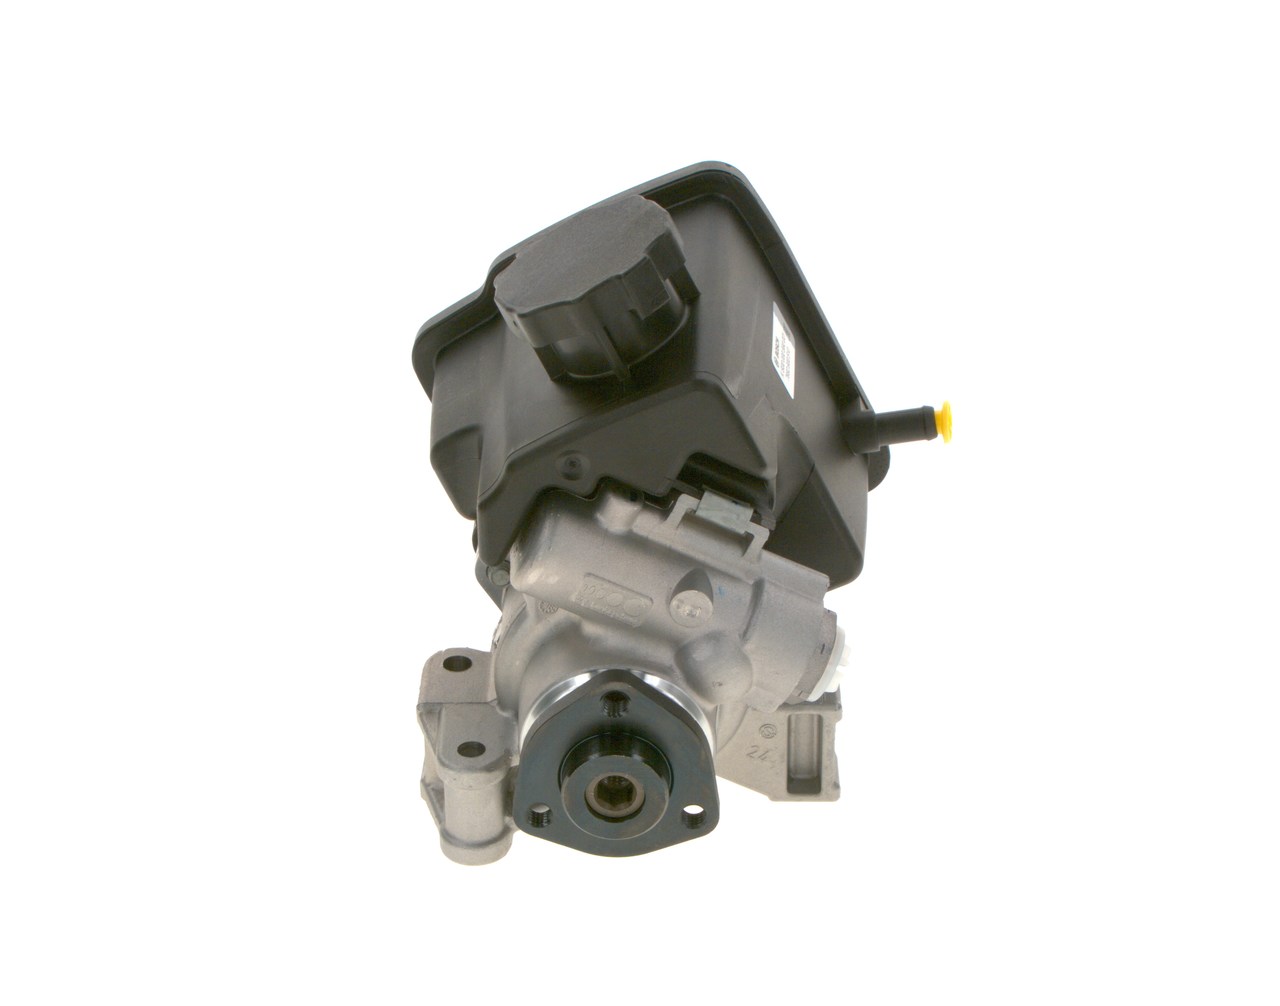 BOSCH K S01 000 560 Power steering pump Hydraulic, 120 bar, Pressure-limiting Valve, Vane Pump, Clockwise rotation